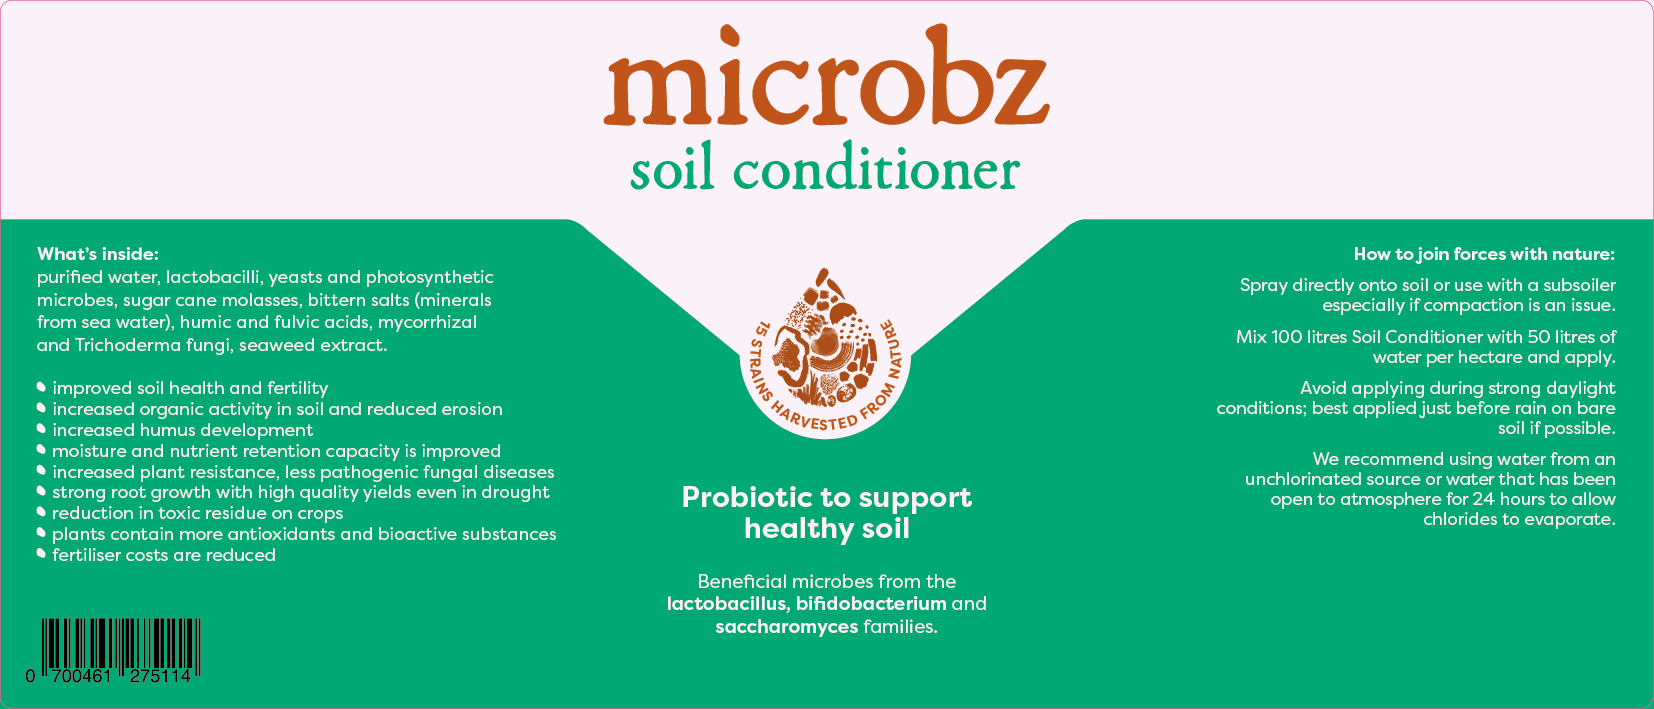 microbz soil conditioner label